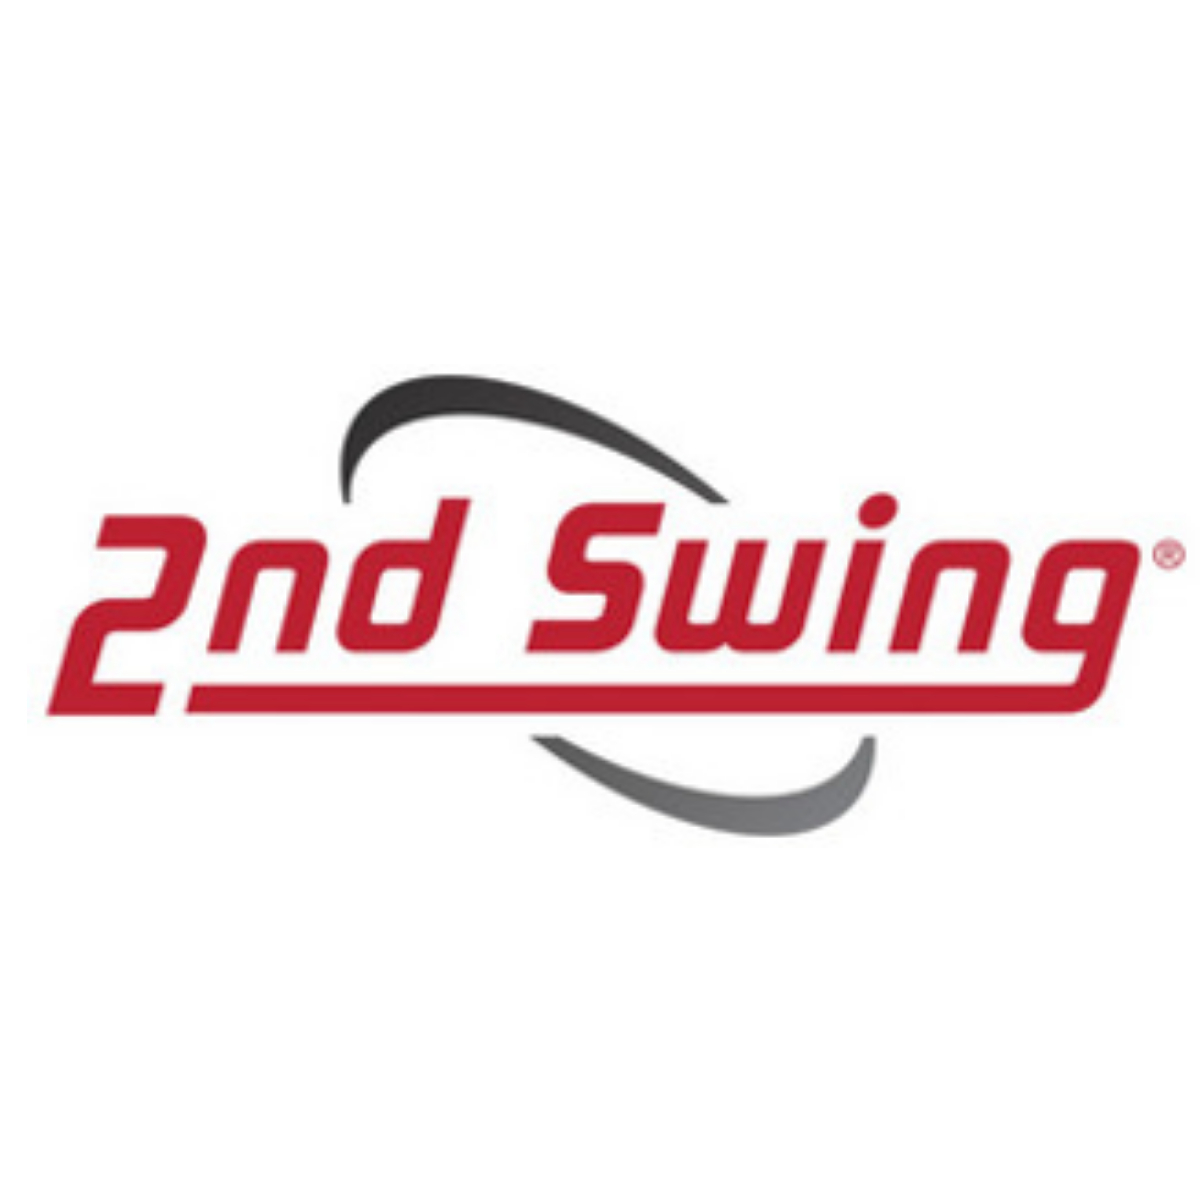 2nd Swing - Columbia Logo